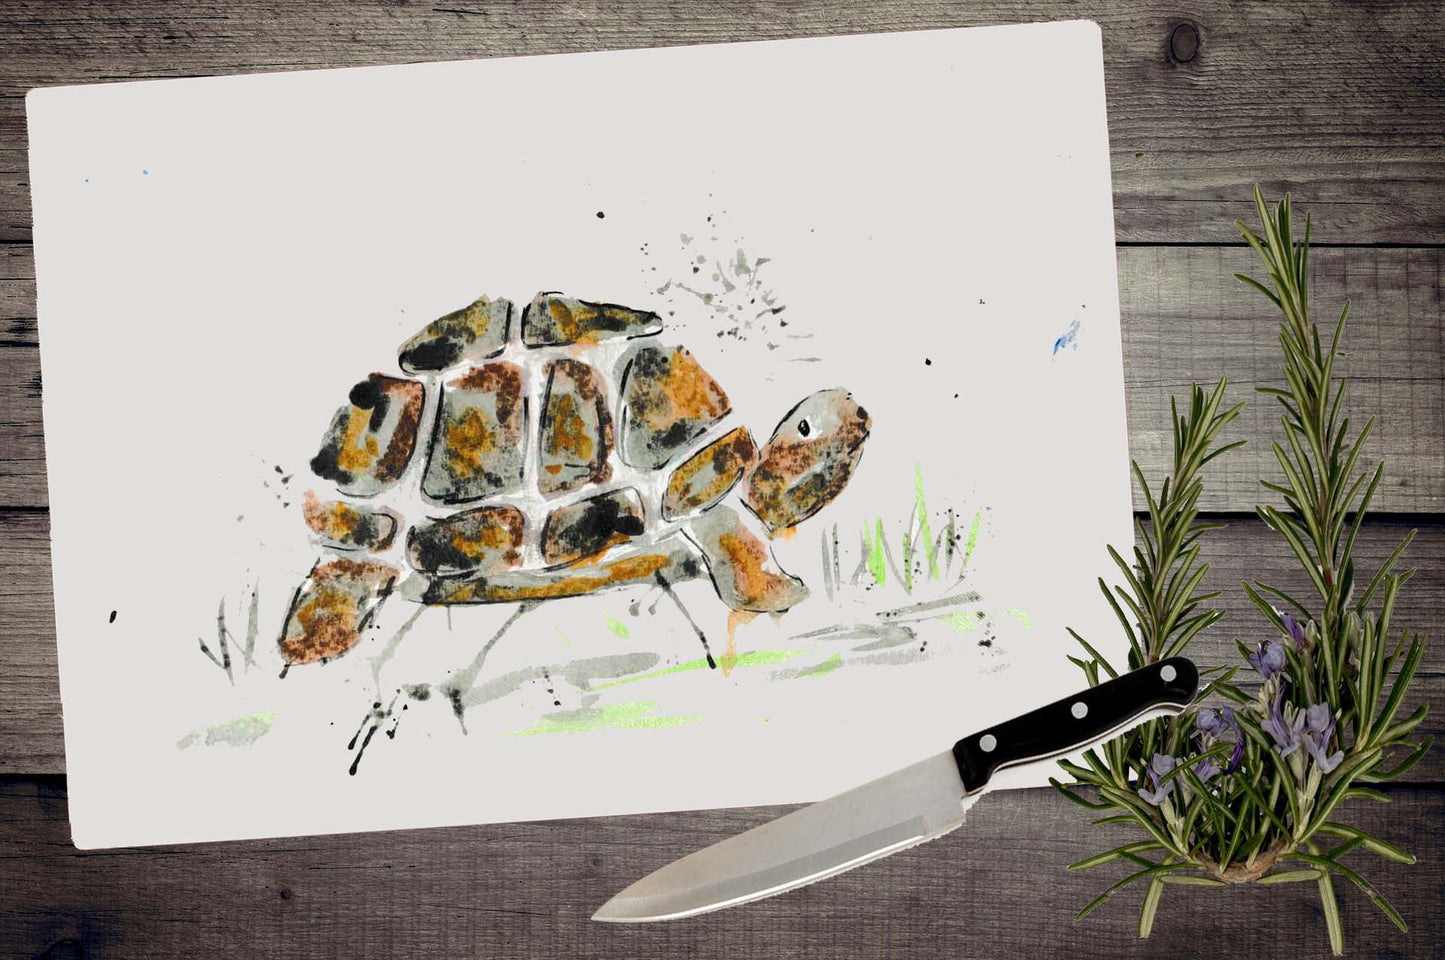 Tortoise chopping board / Worktop saver